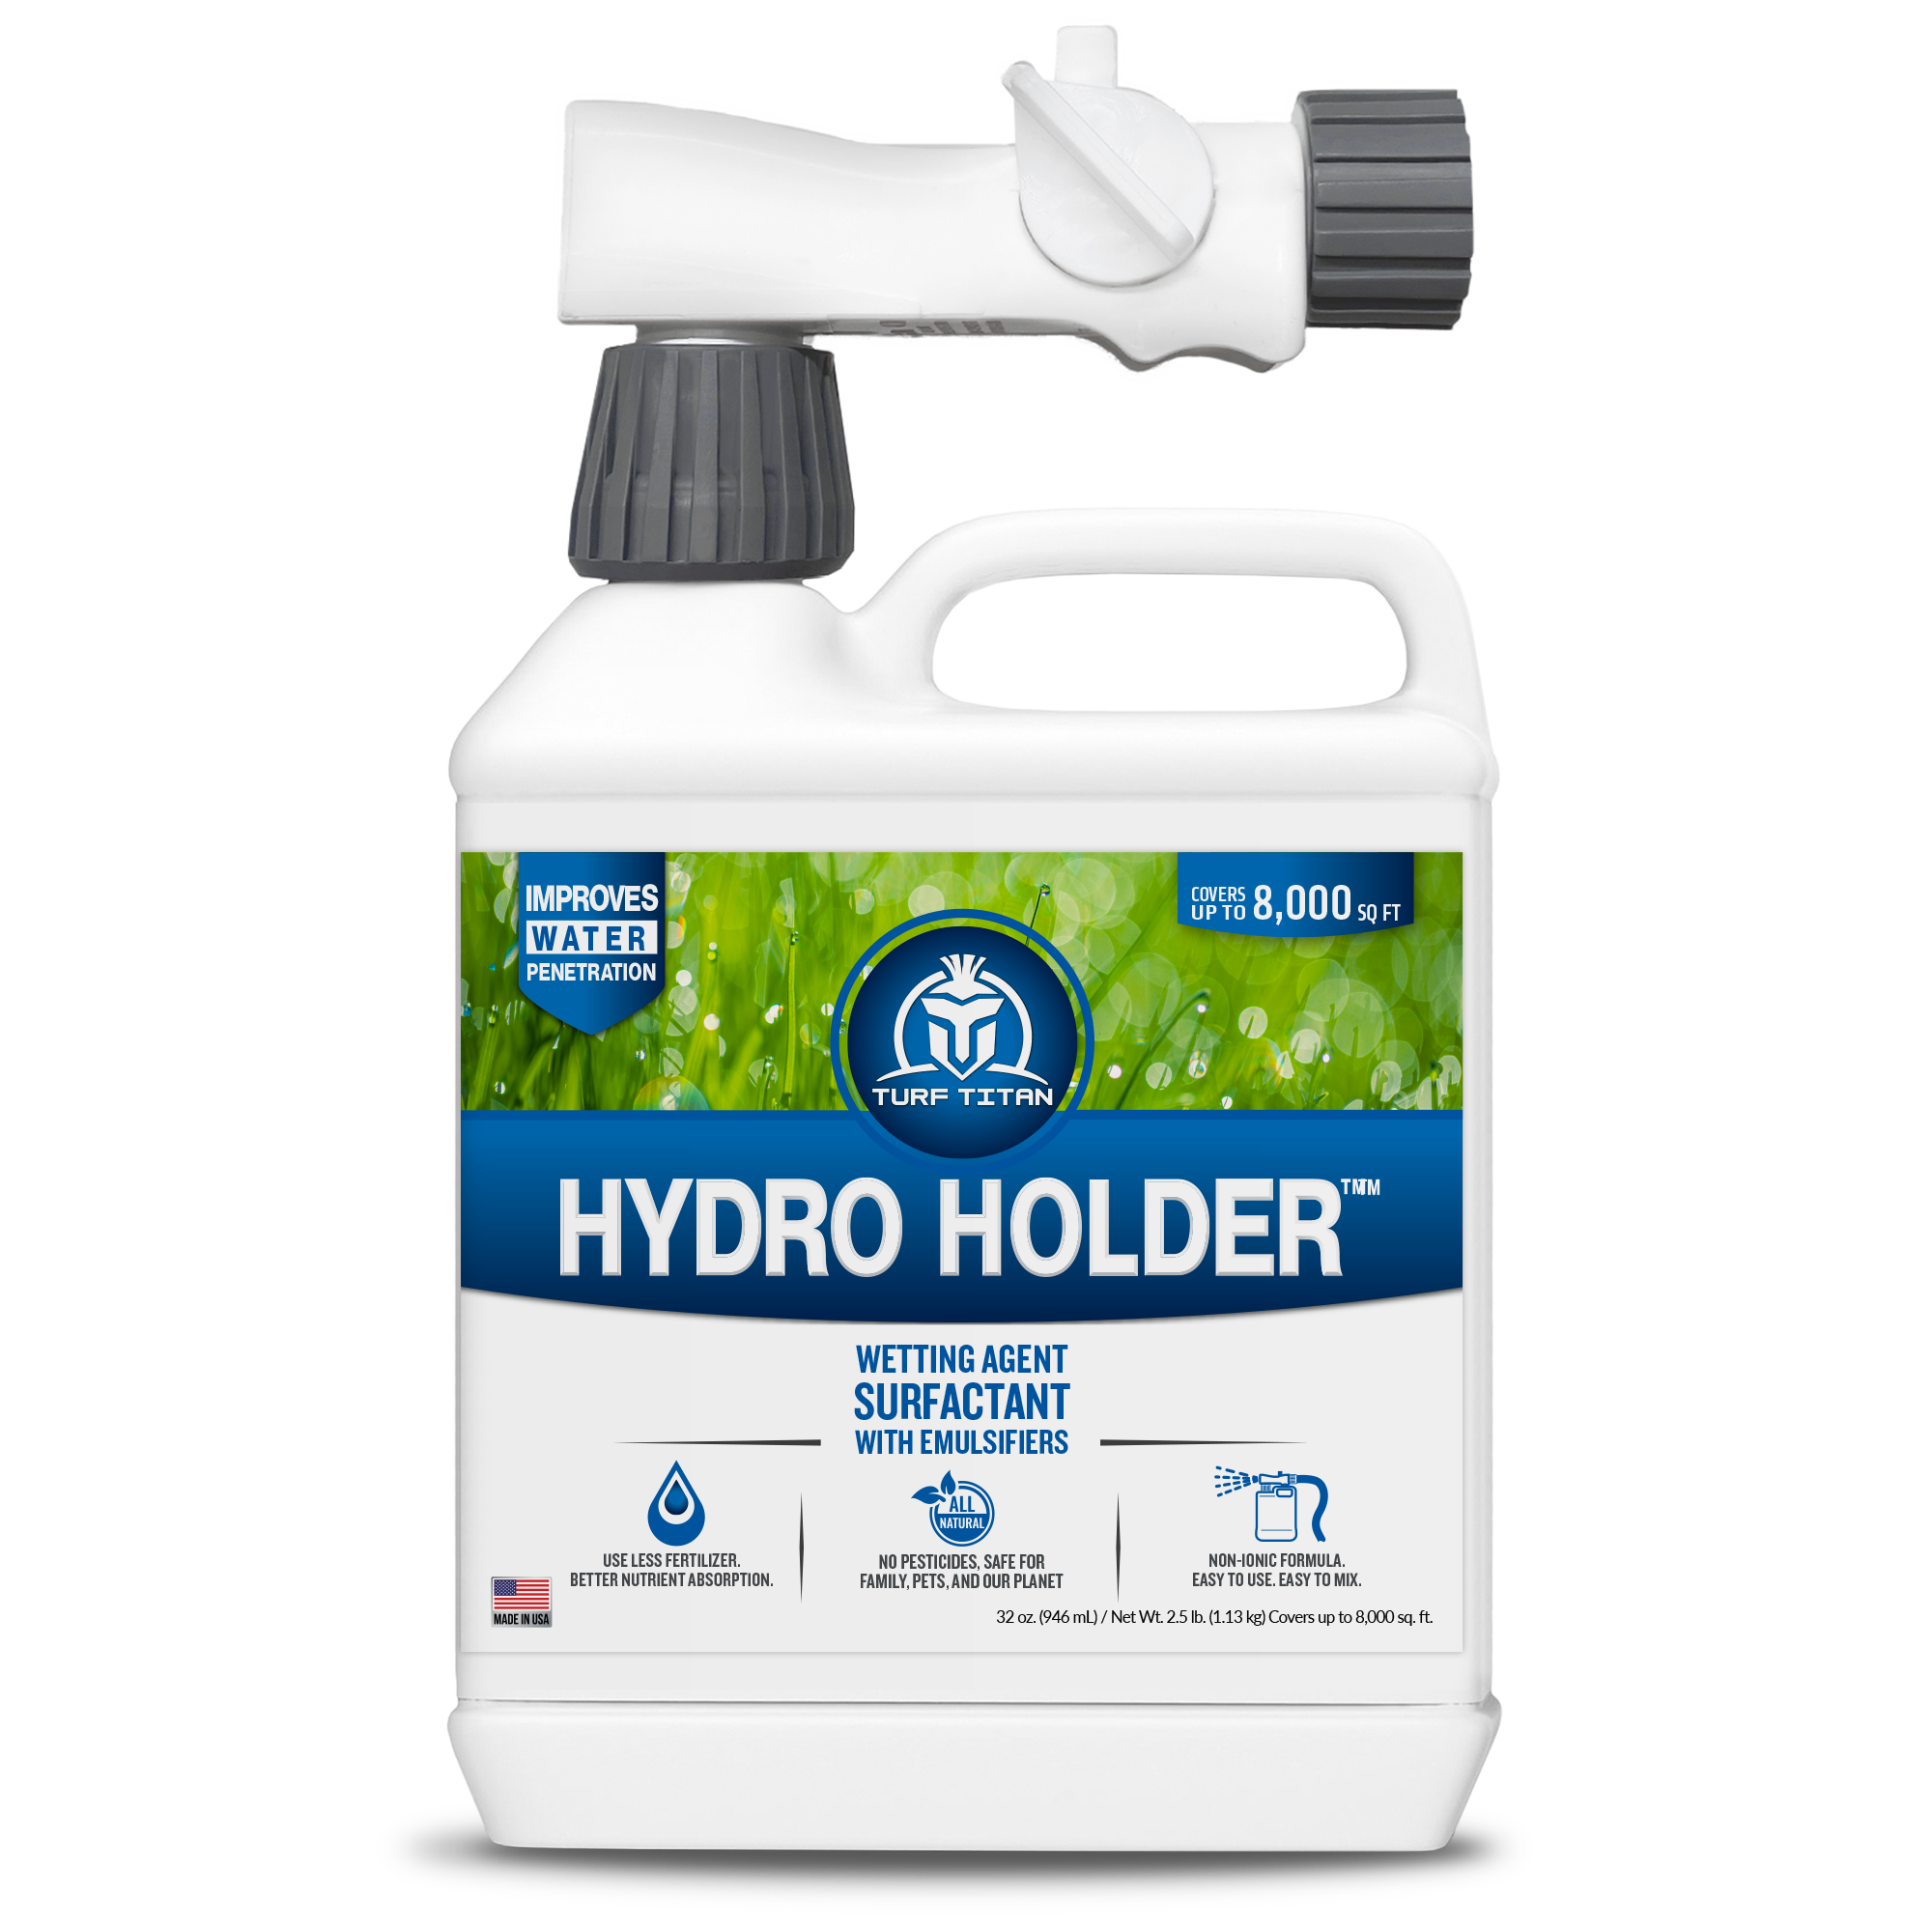 Hydro Holder